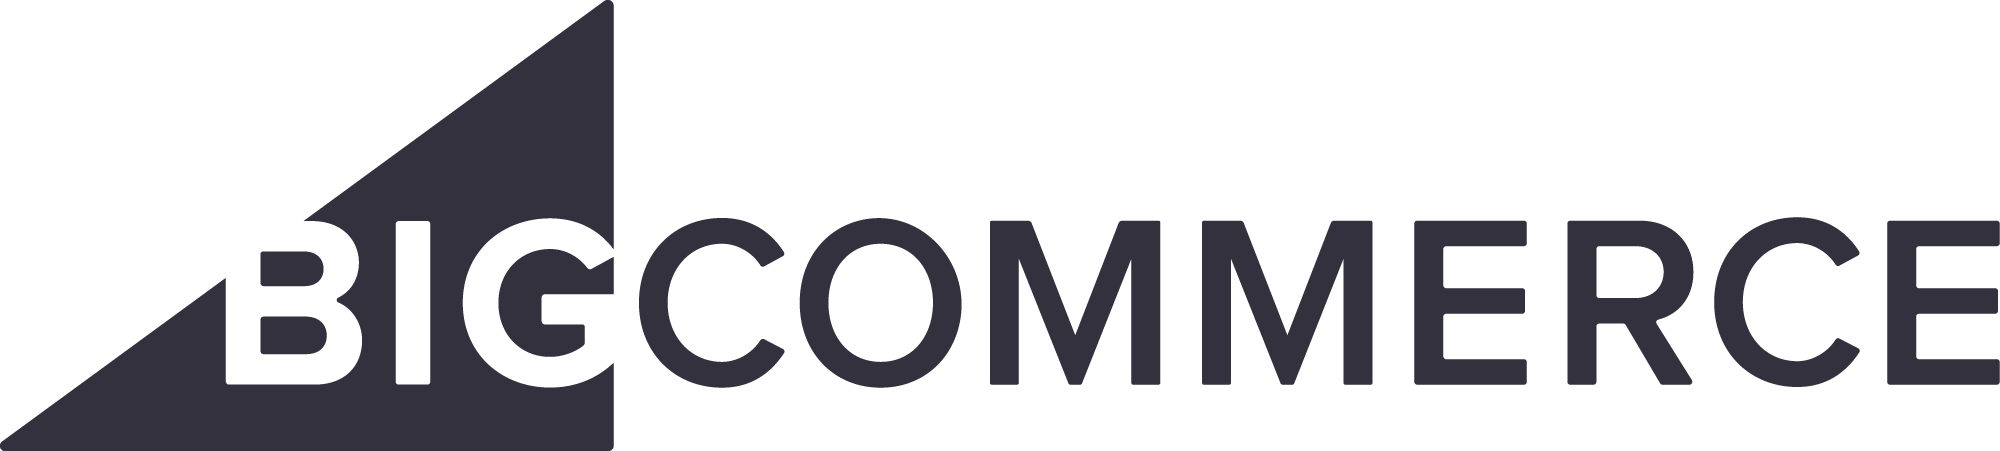 Integration Logo - Bigcommerce